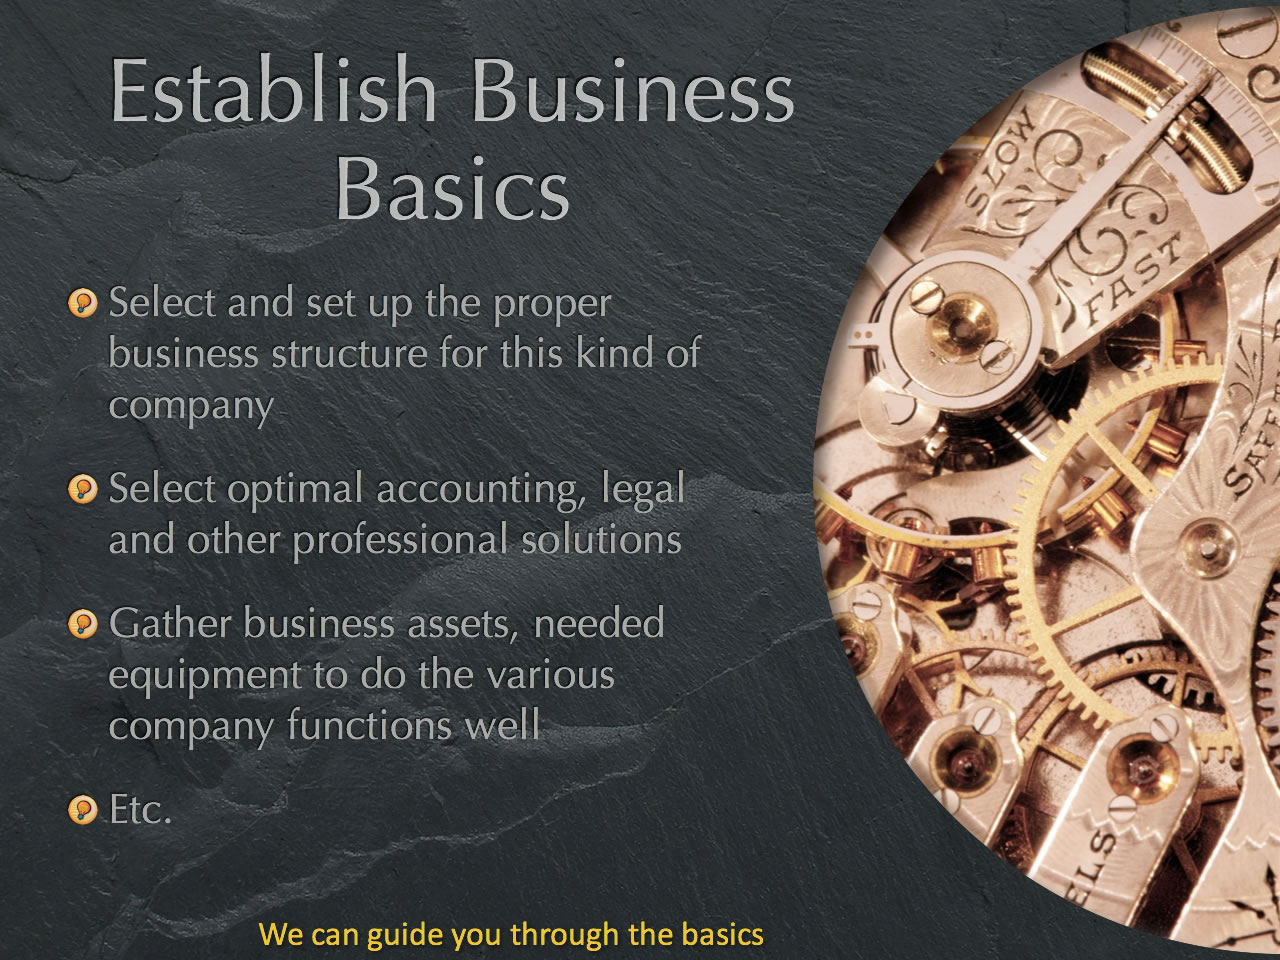 Establish financial publishing investor newsletter business basics. Get the foundational parts right